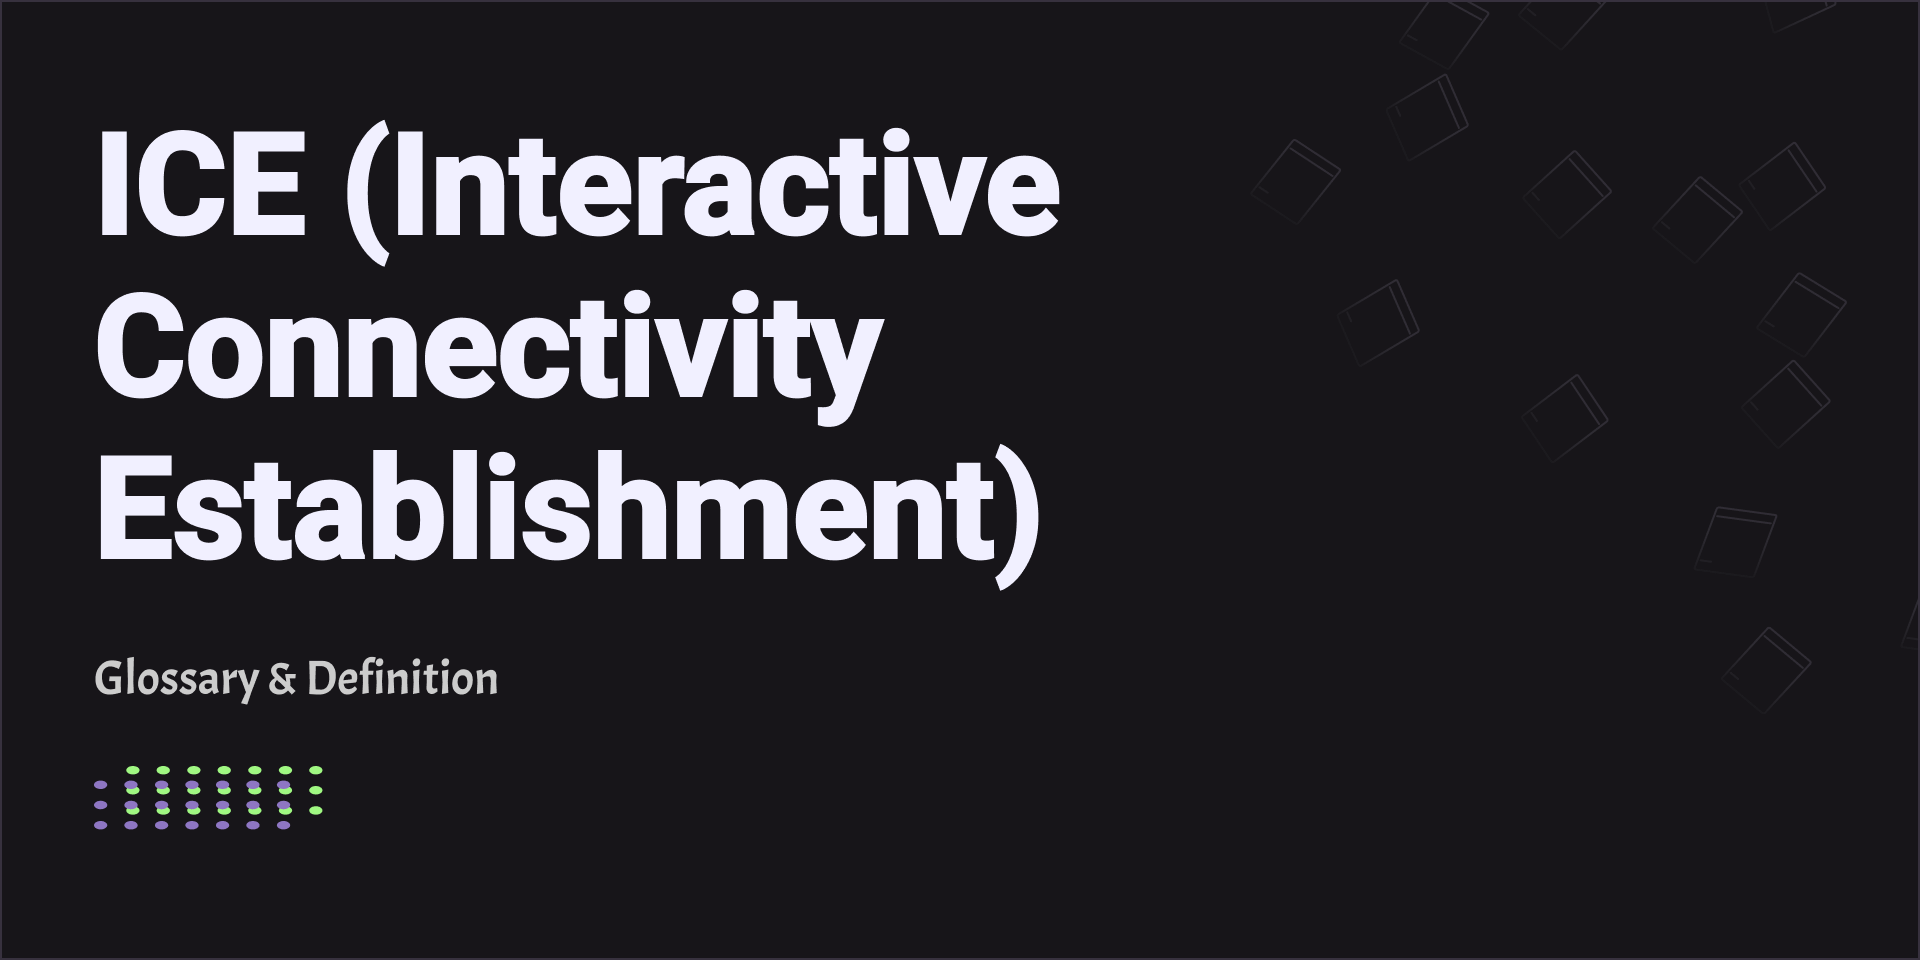 ICE (Interactive Connectivity Establishment)